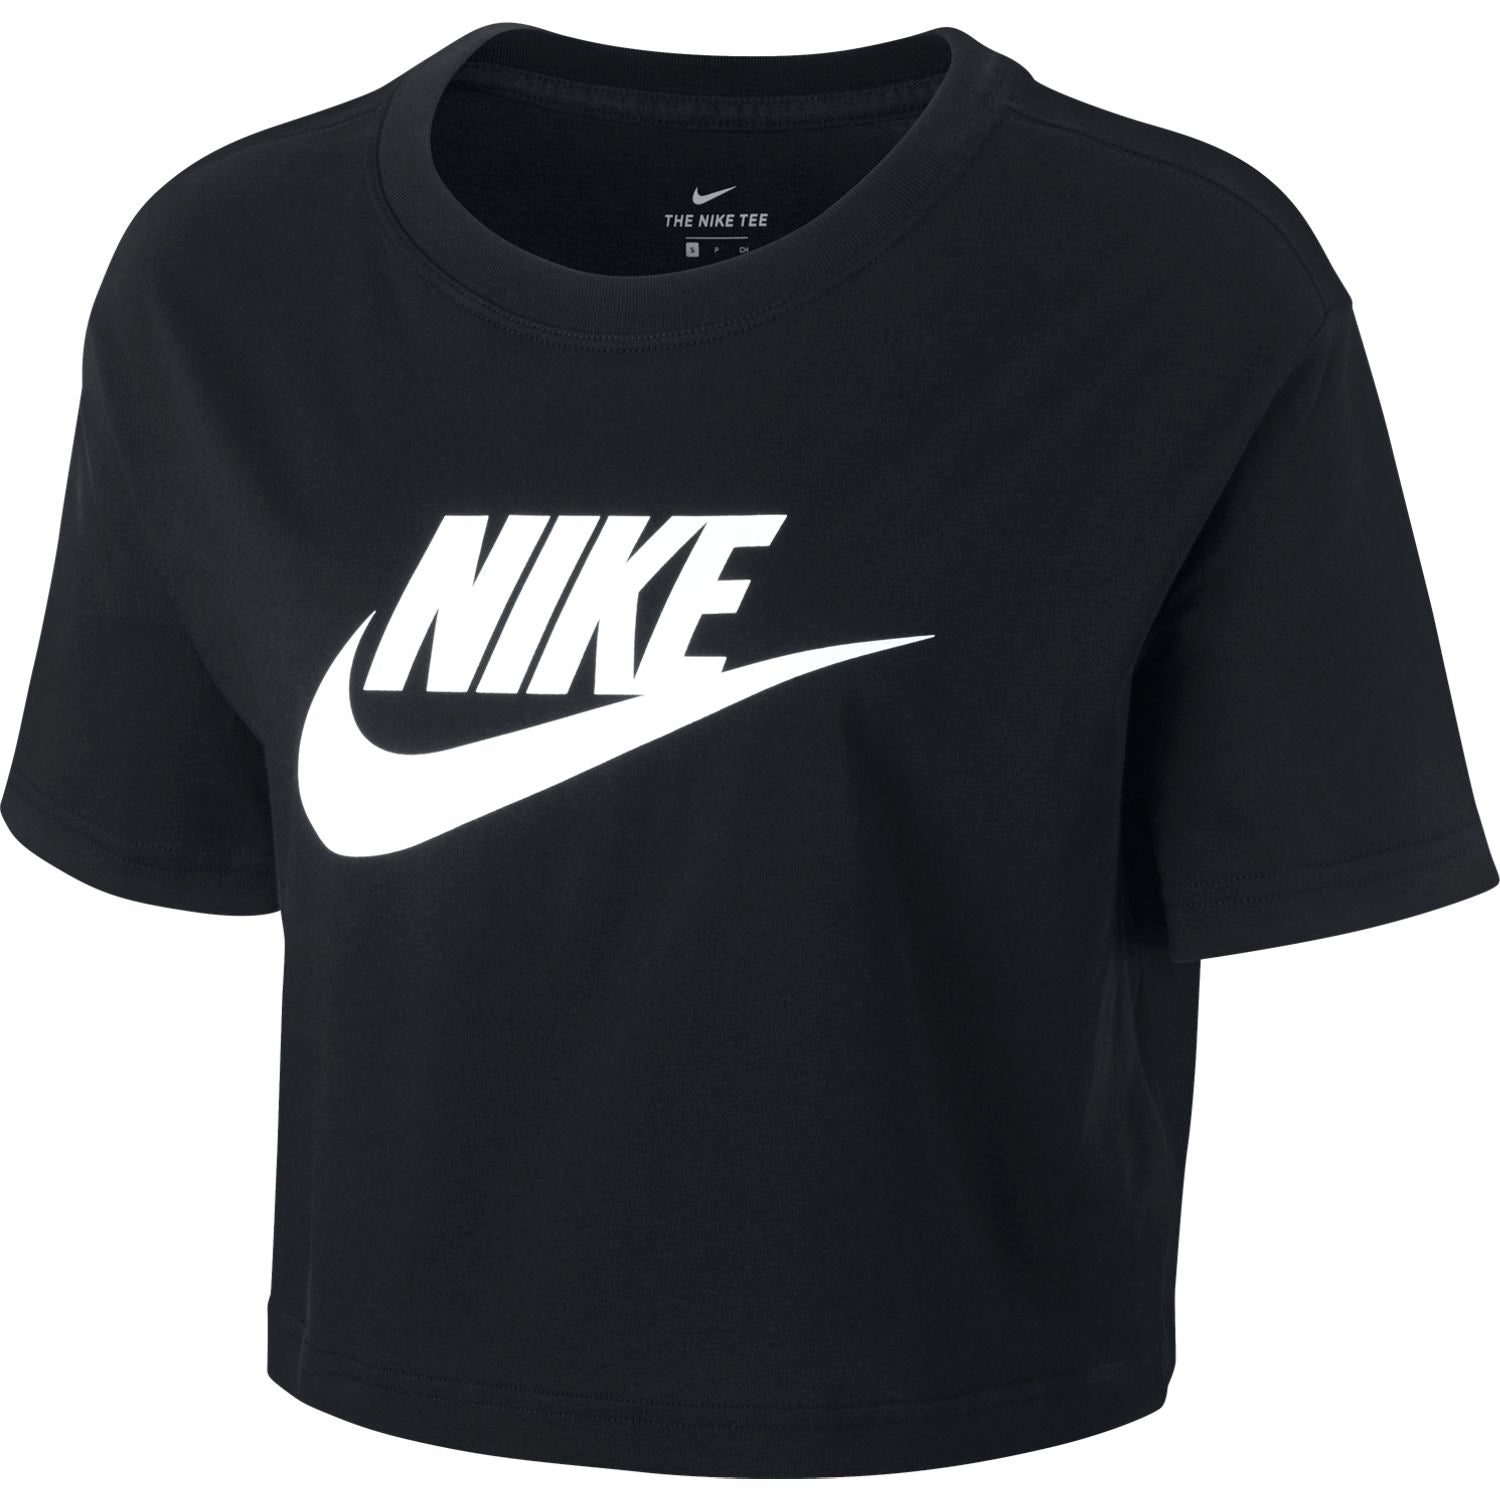 Nike Sportswear Essentials Women's Ribbed Cropped T-Shirt Black